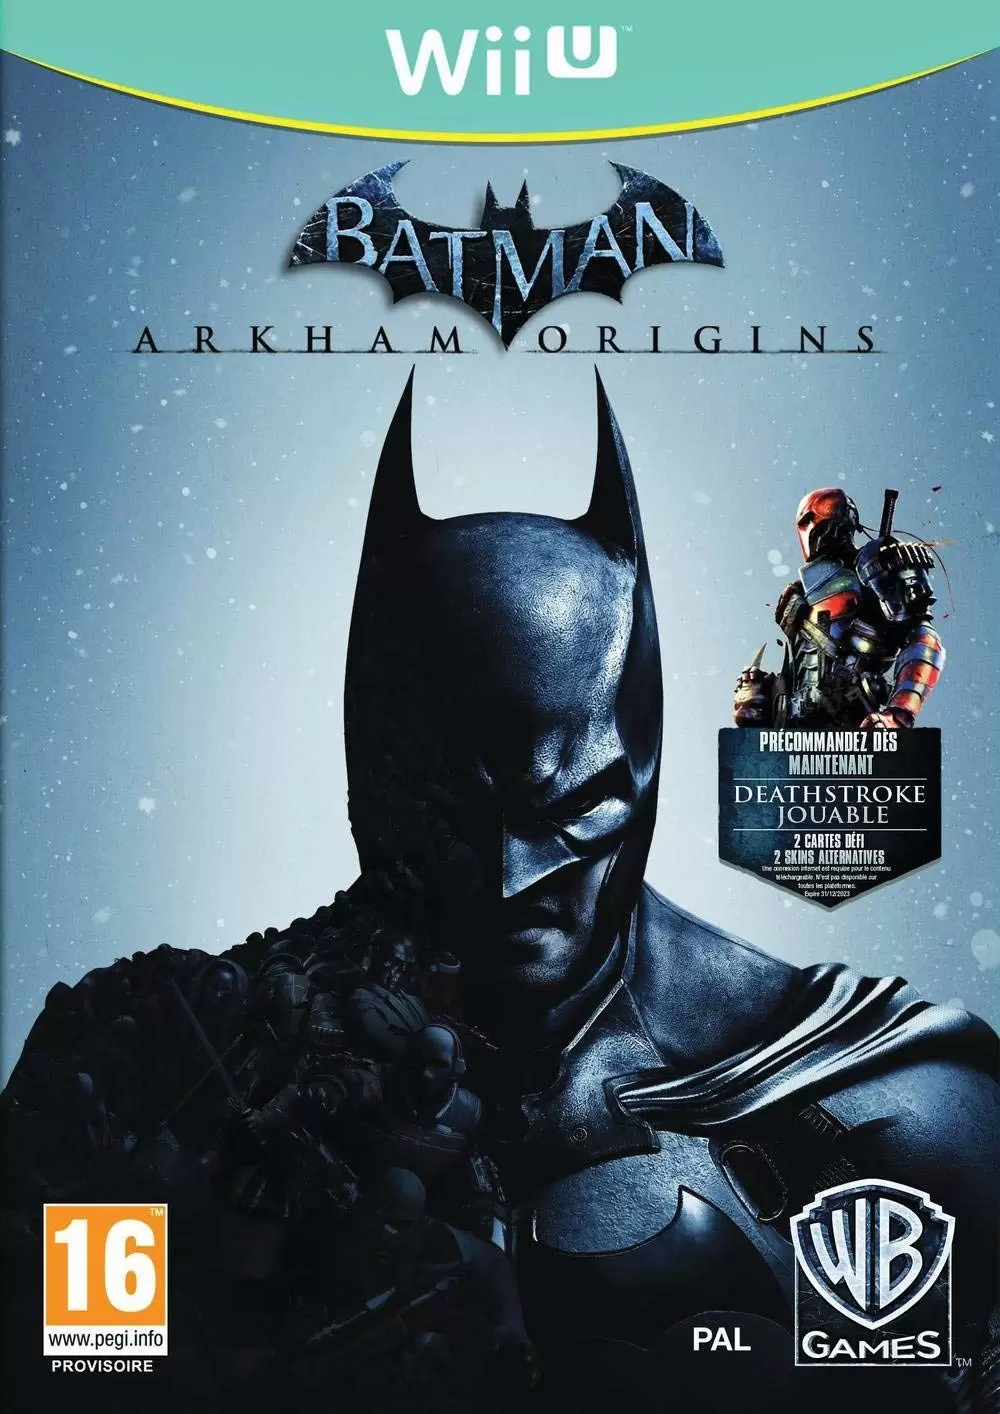 Wii U Games - Batman : Arkham Origins